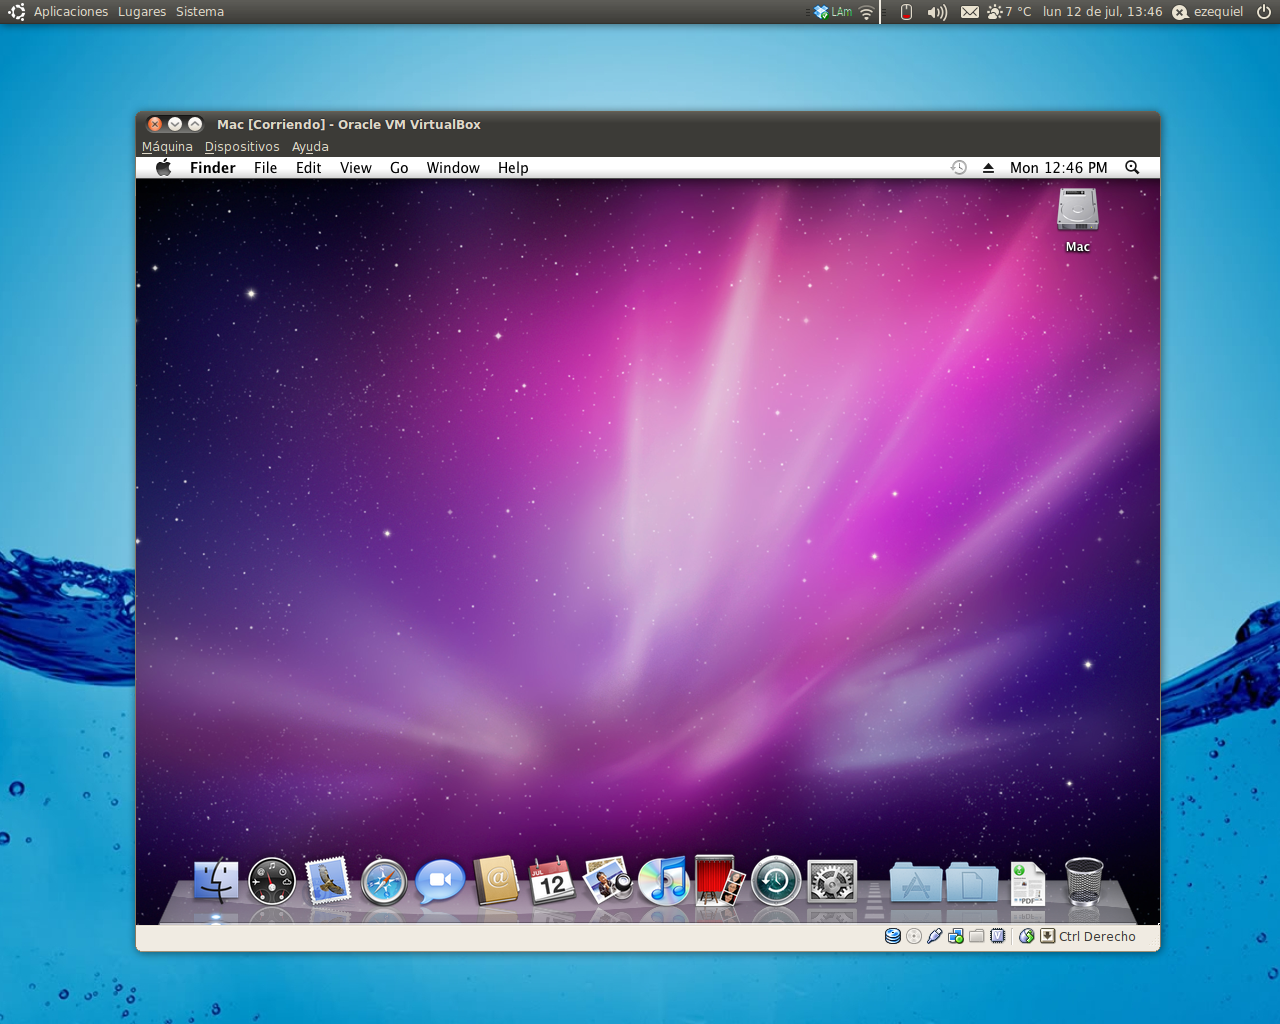 Mac os x iso for virtualbox torrent windows 7